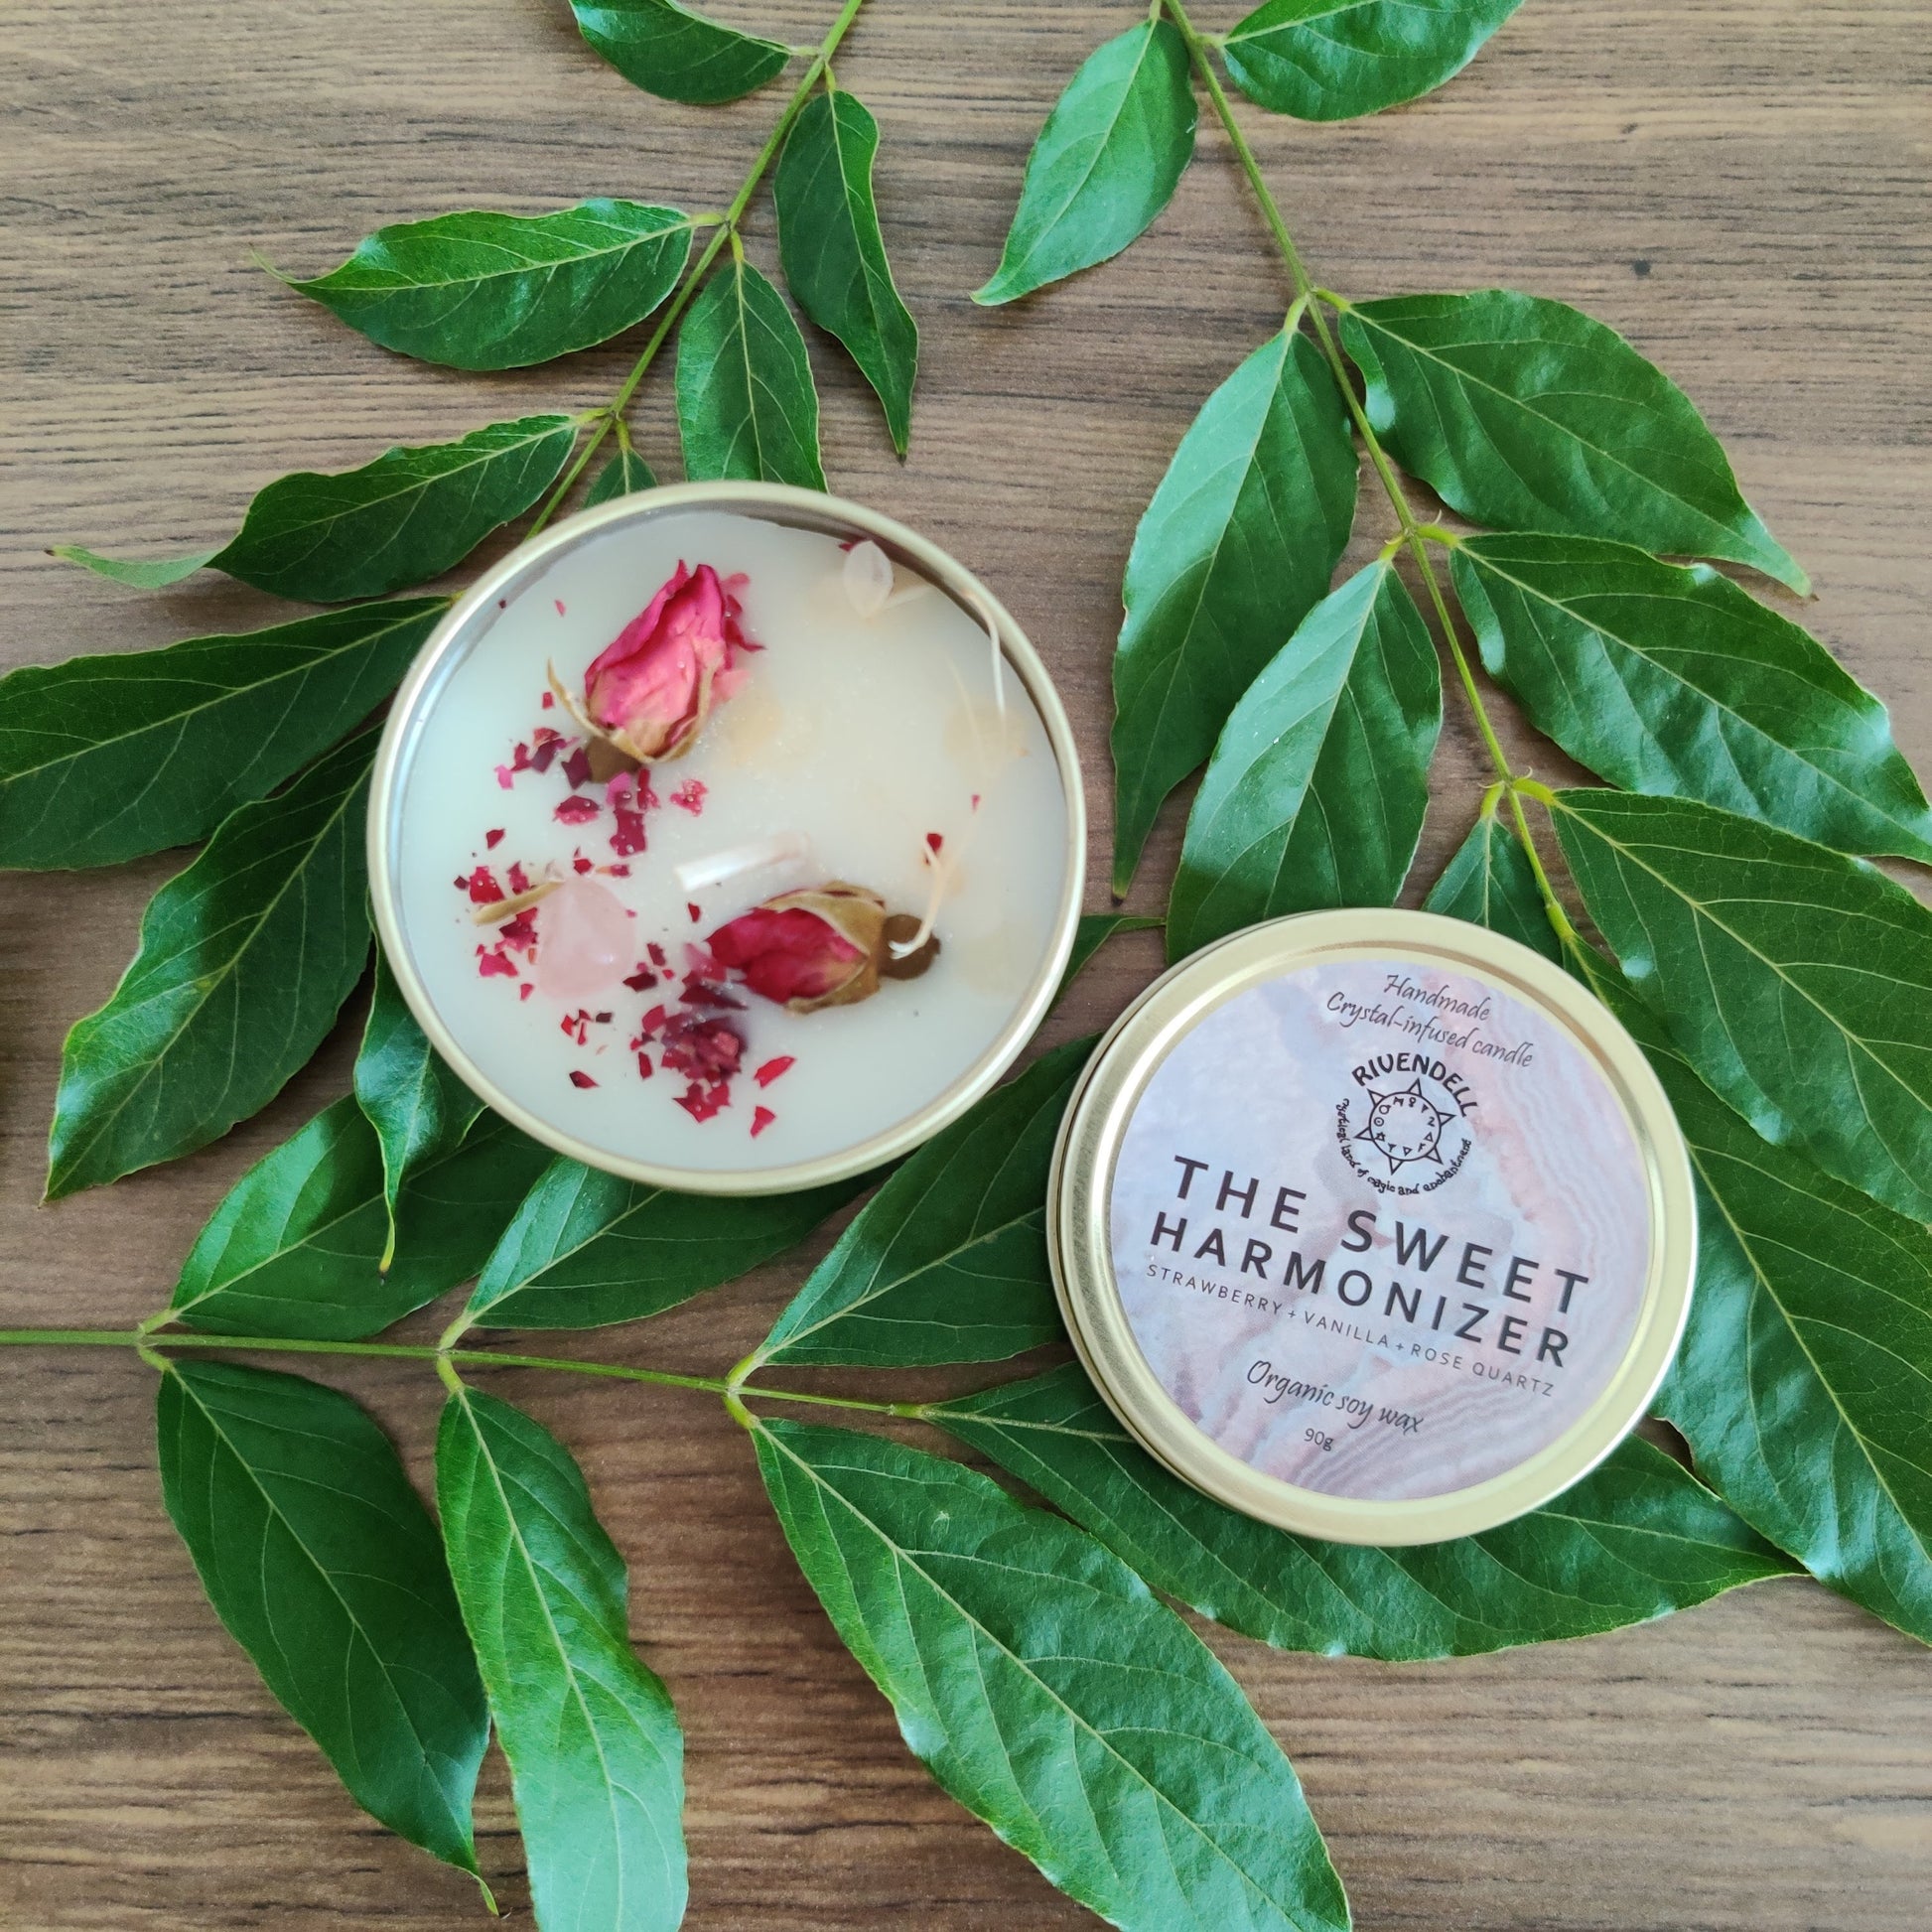 "The Sweet Harmonizer" Strawberry + Vanilla + Rose Quartz Crystal-infused Tin Candle - Rivendell Shop